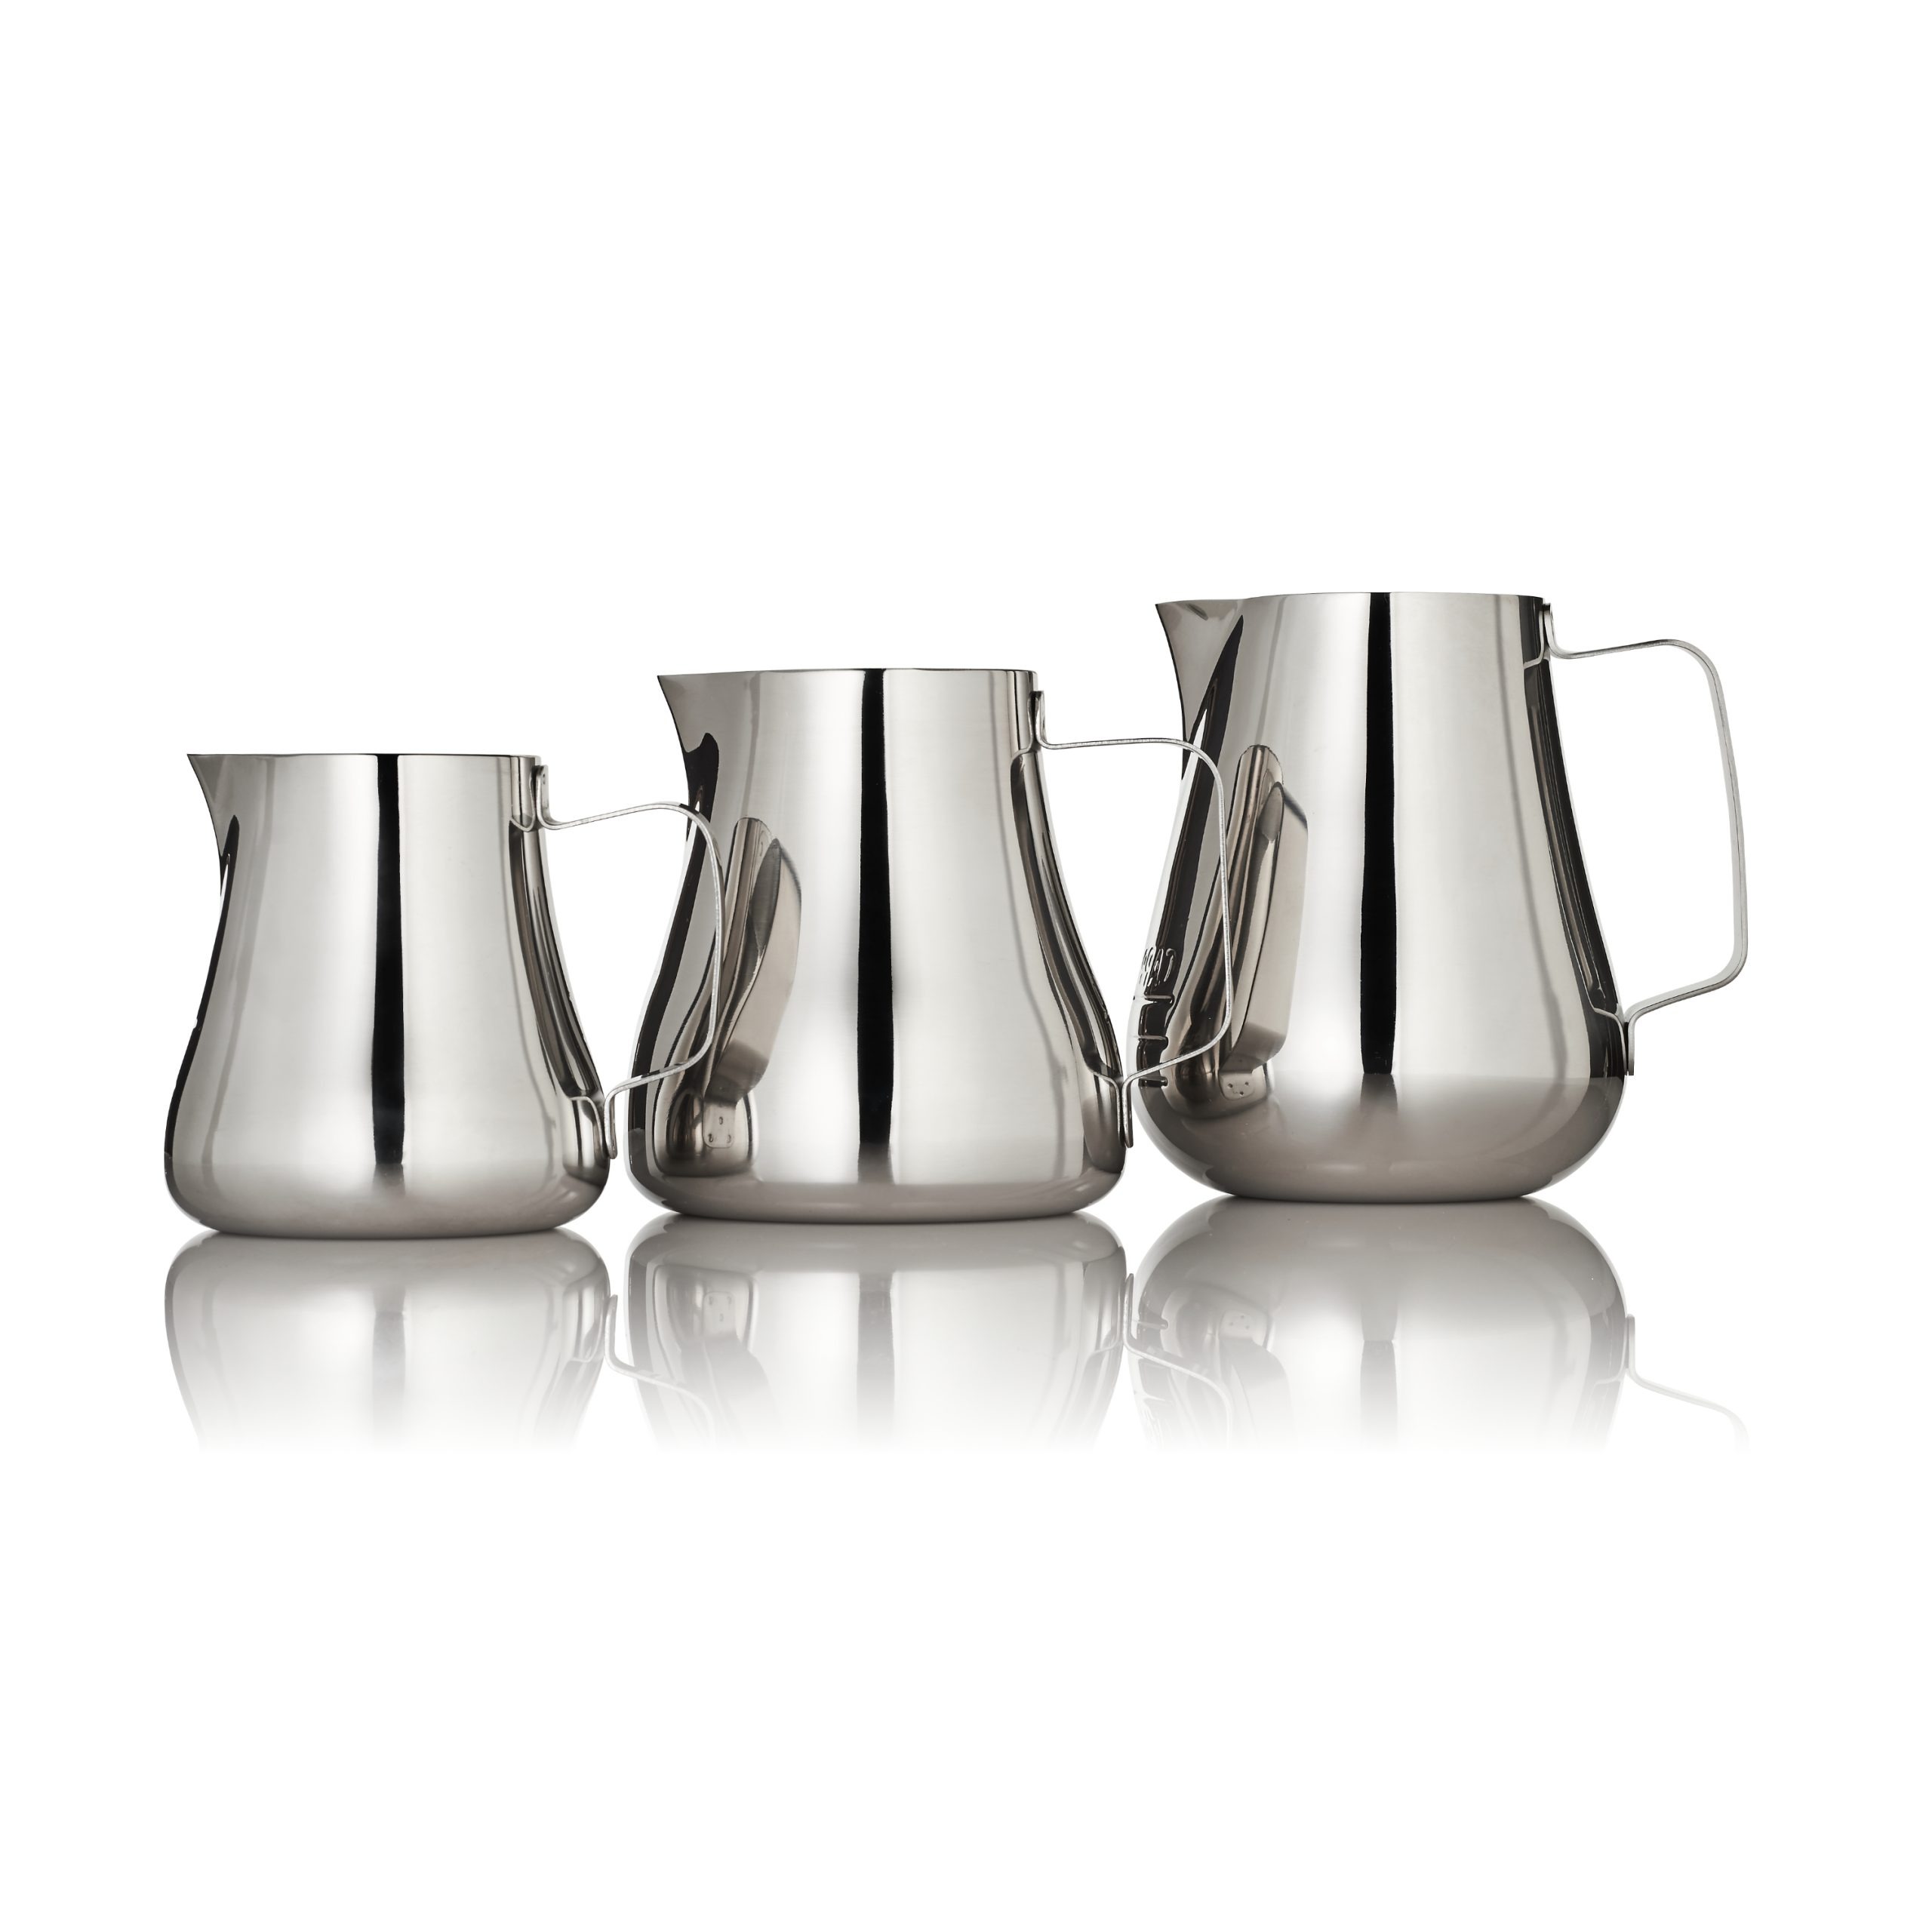 https://ikigai.coffee/wp-content/uploads/2020/04/Toroid-pitchers-scaled.jpg